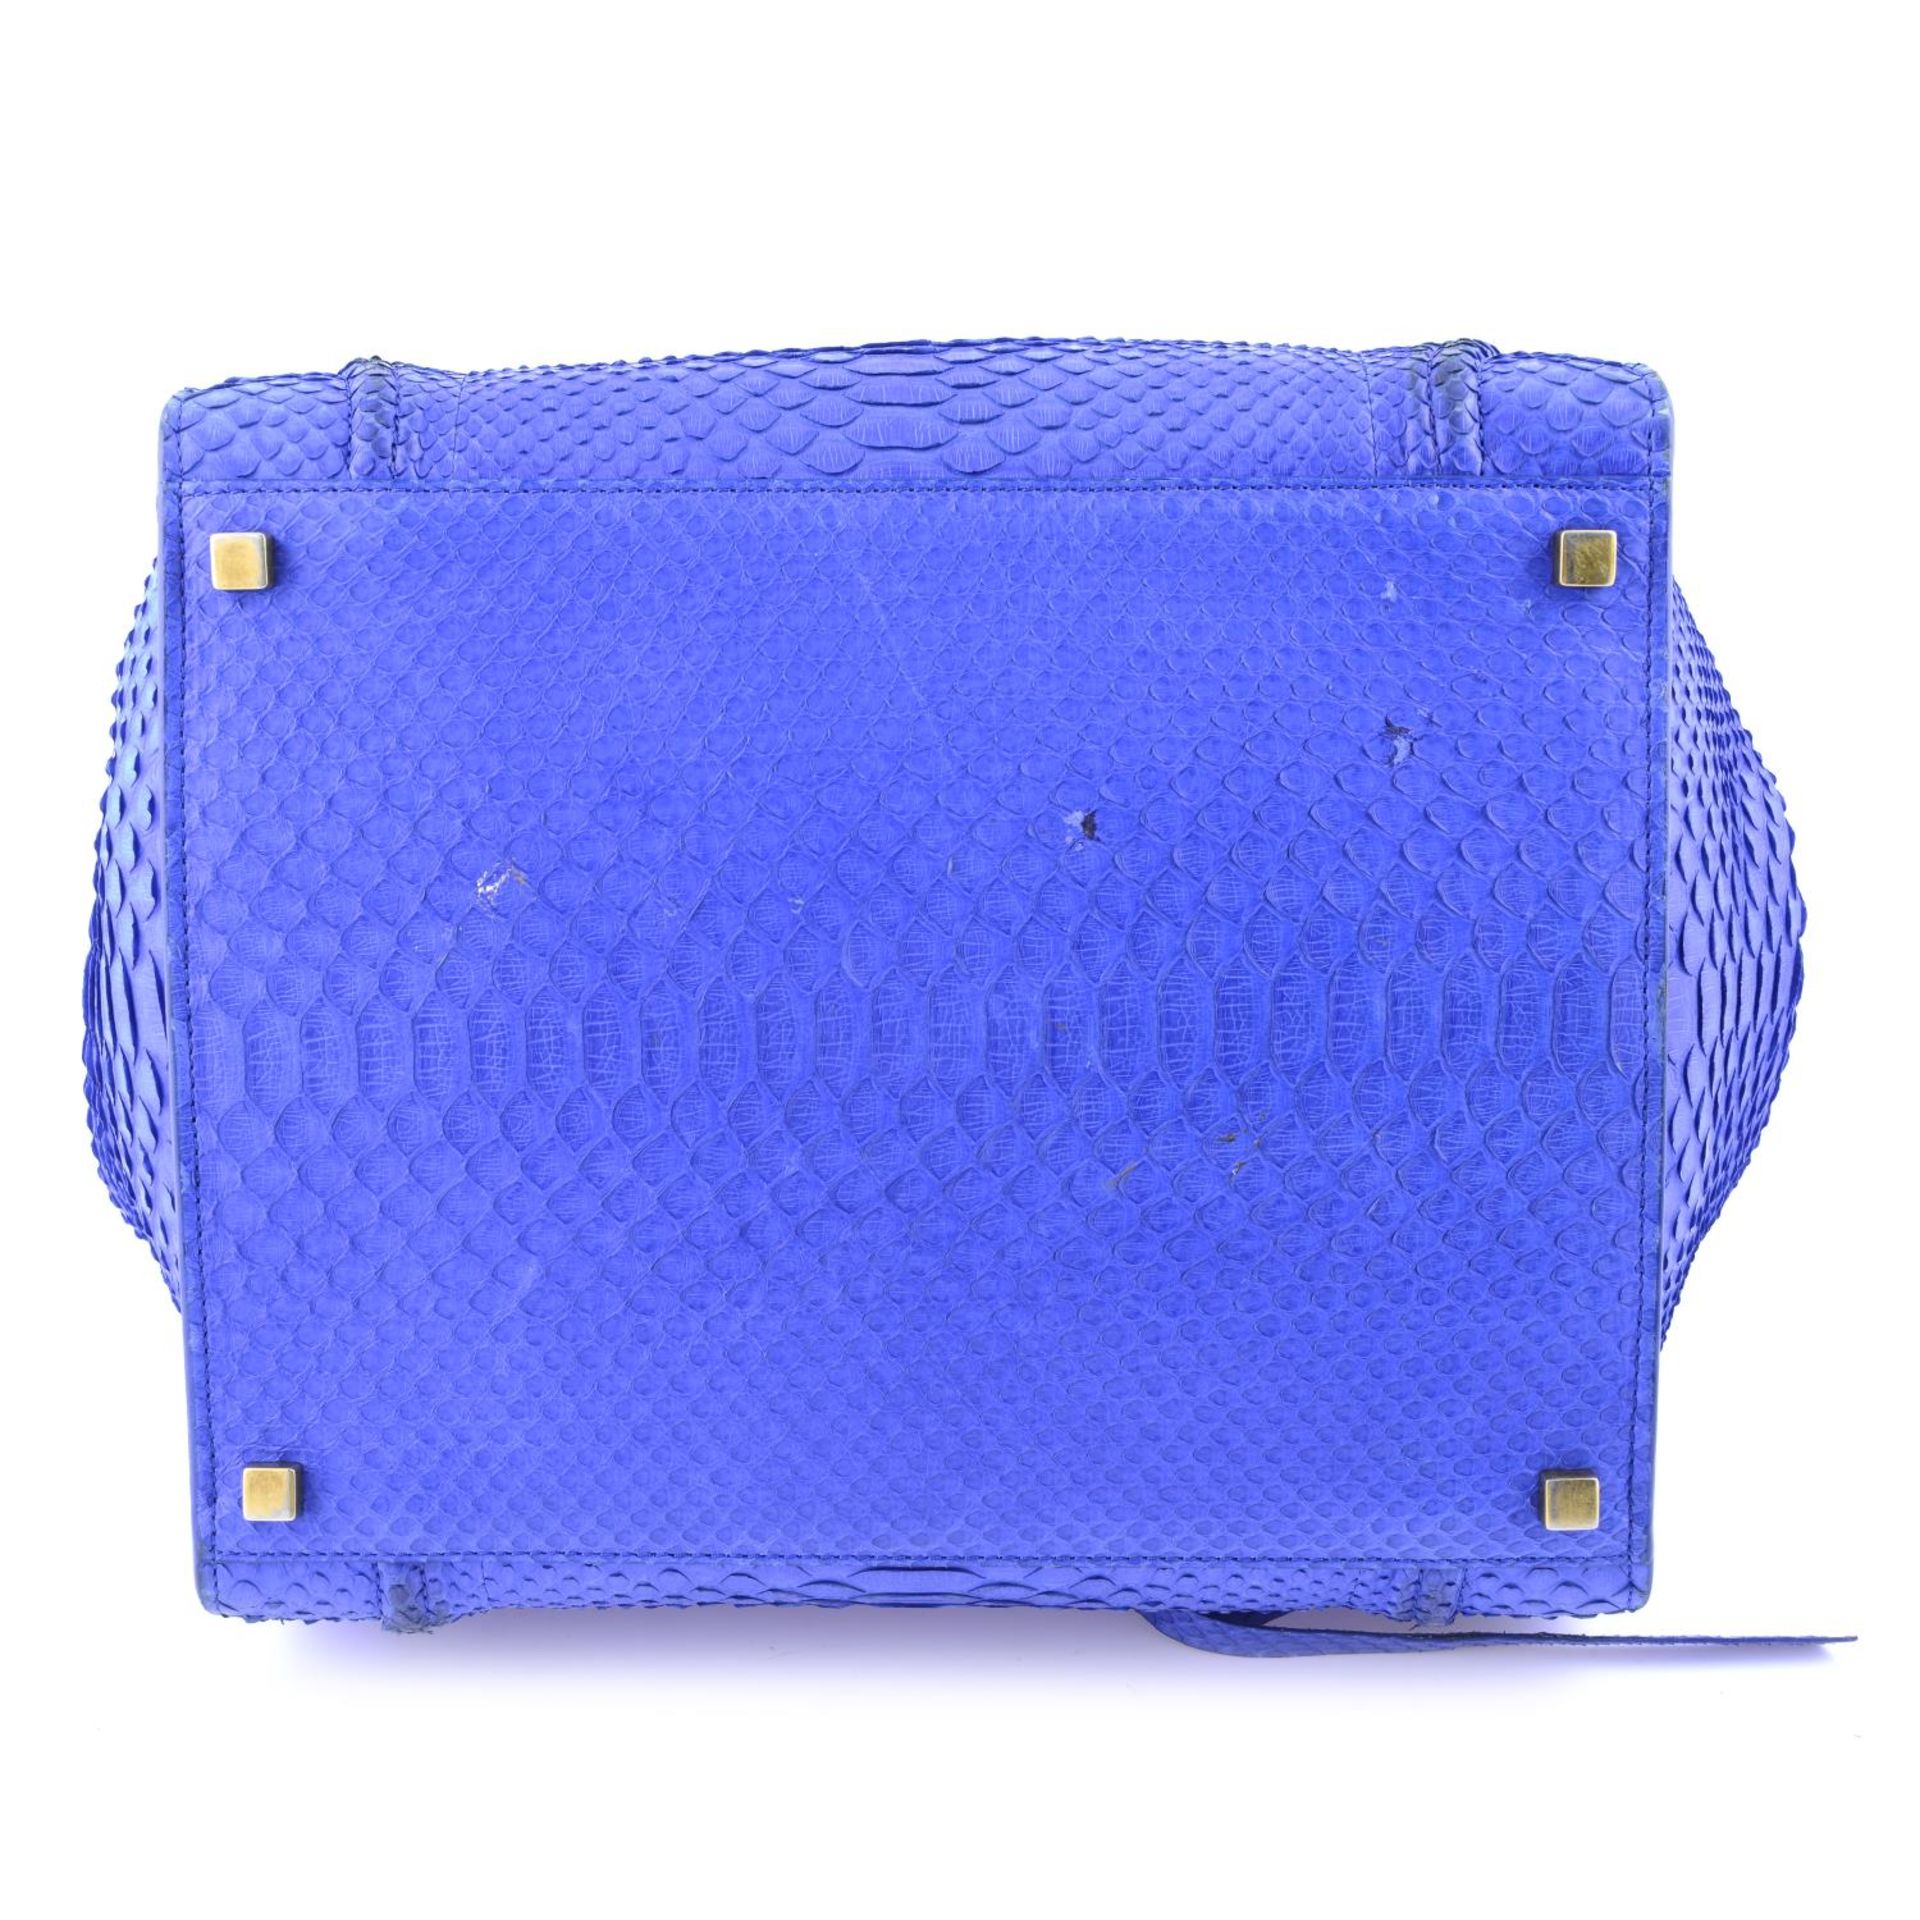 CÉLINE - a blue python skin Phantom handbag. - Bild 4 aus 9